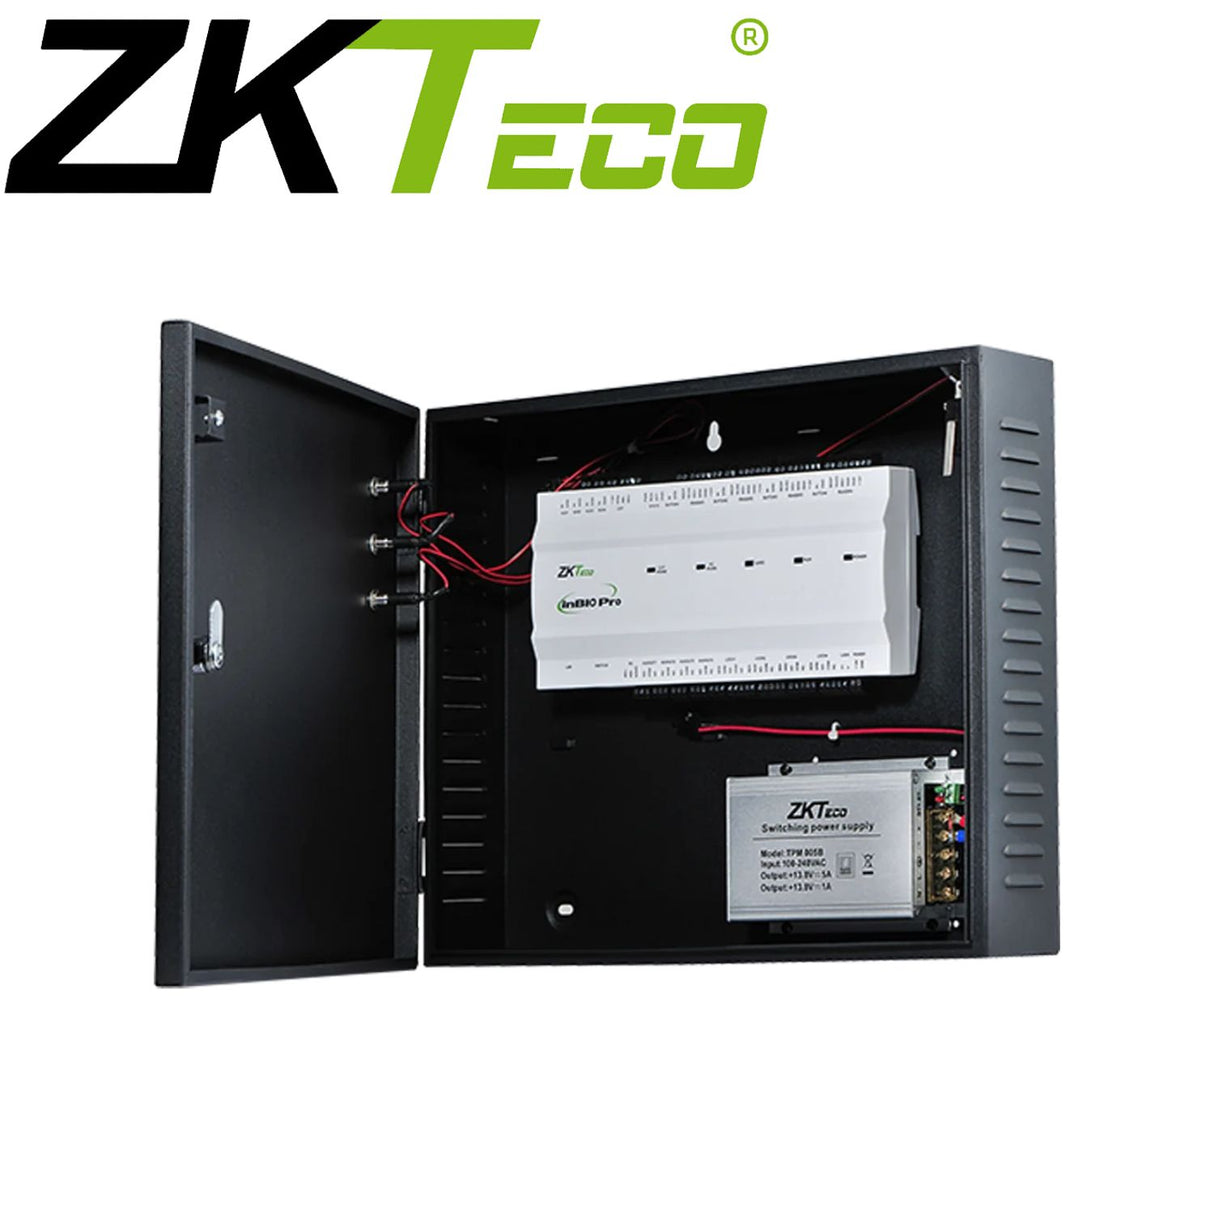 ZKTeco Protection Box for INBIO